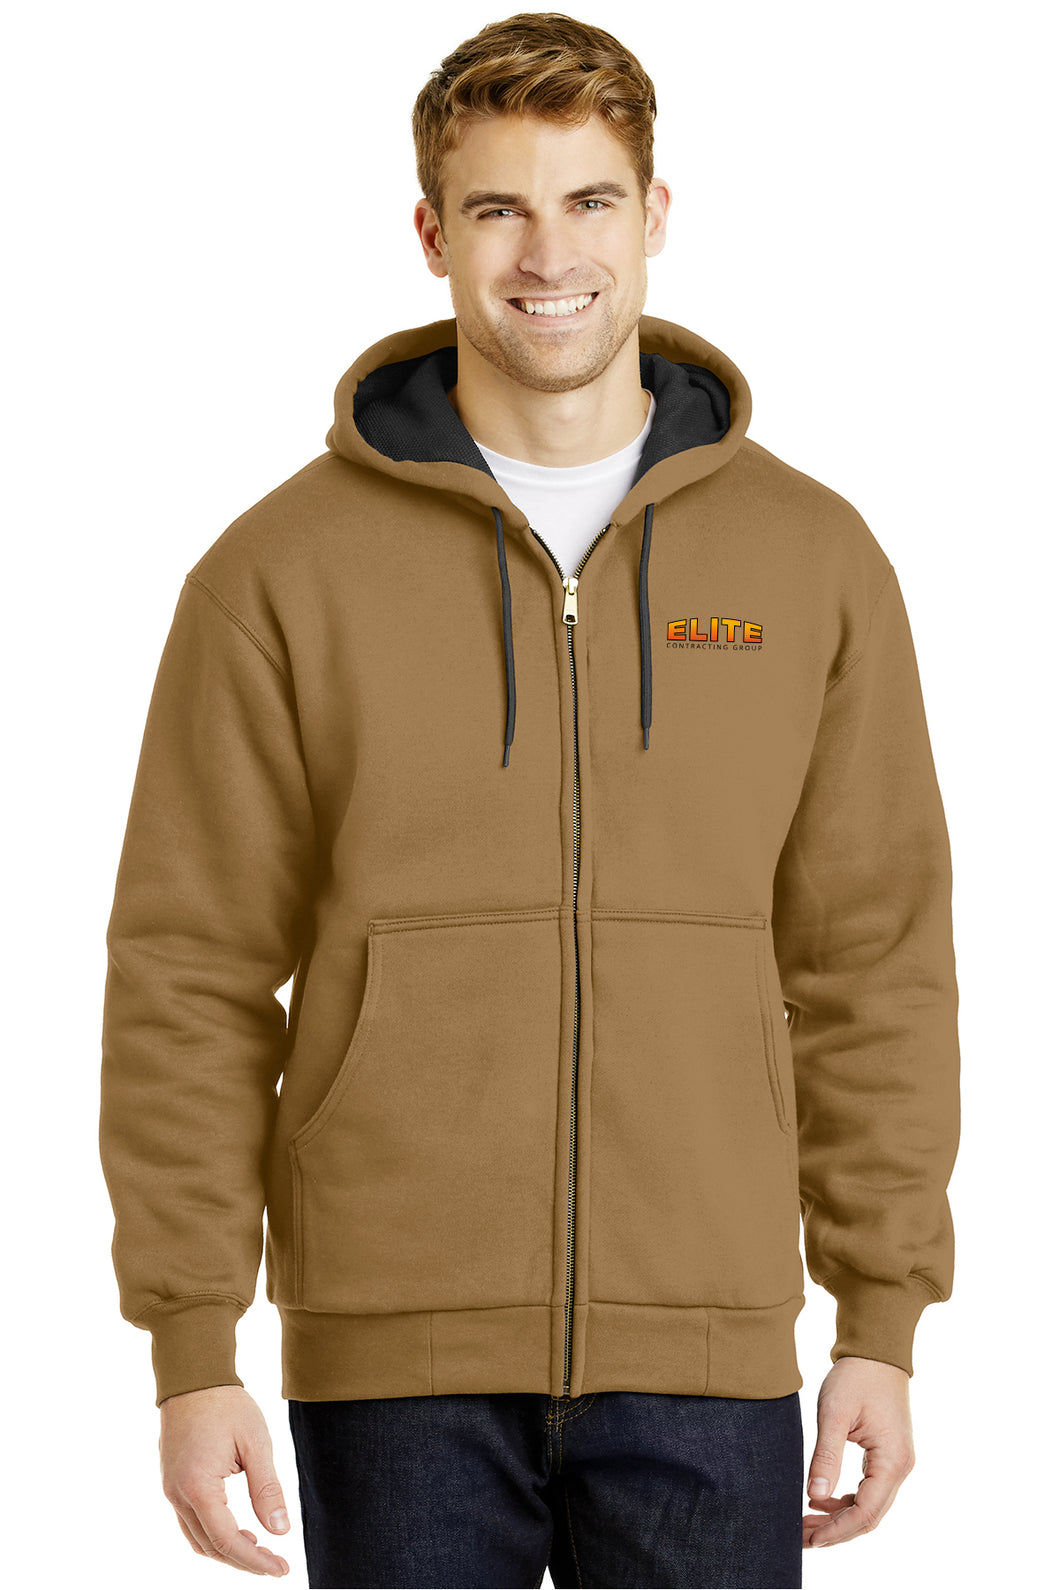 CornerStone® - Heavyweight Full-Zip Hooded Sweatshirt with Thermal Lining